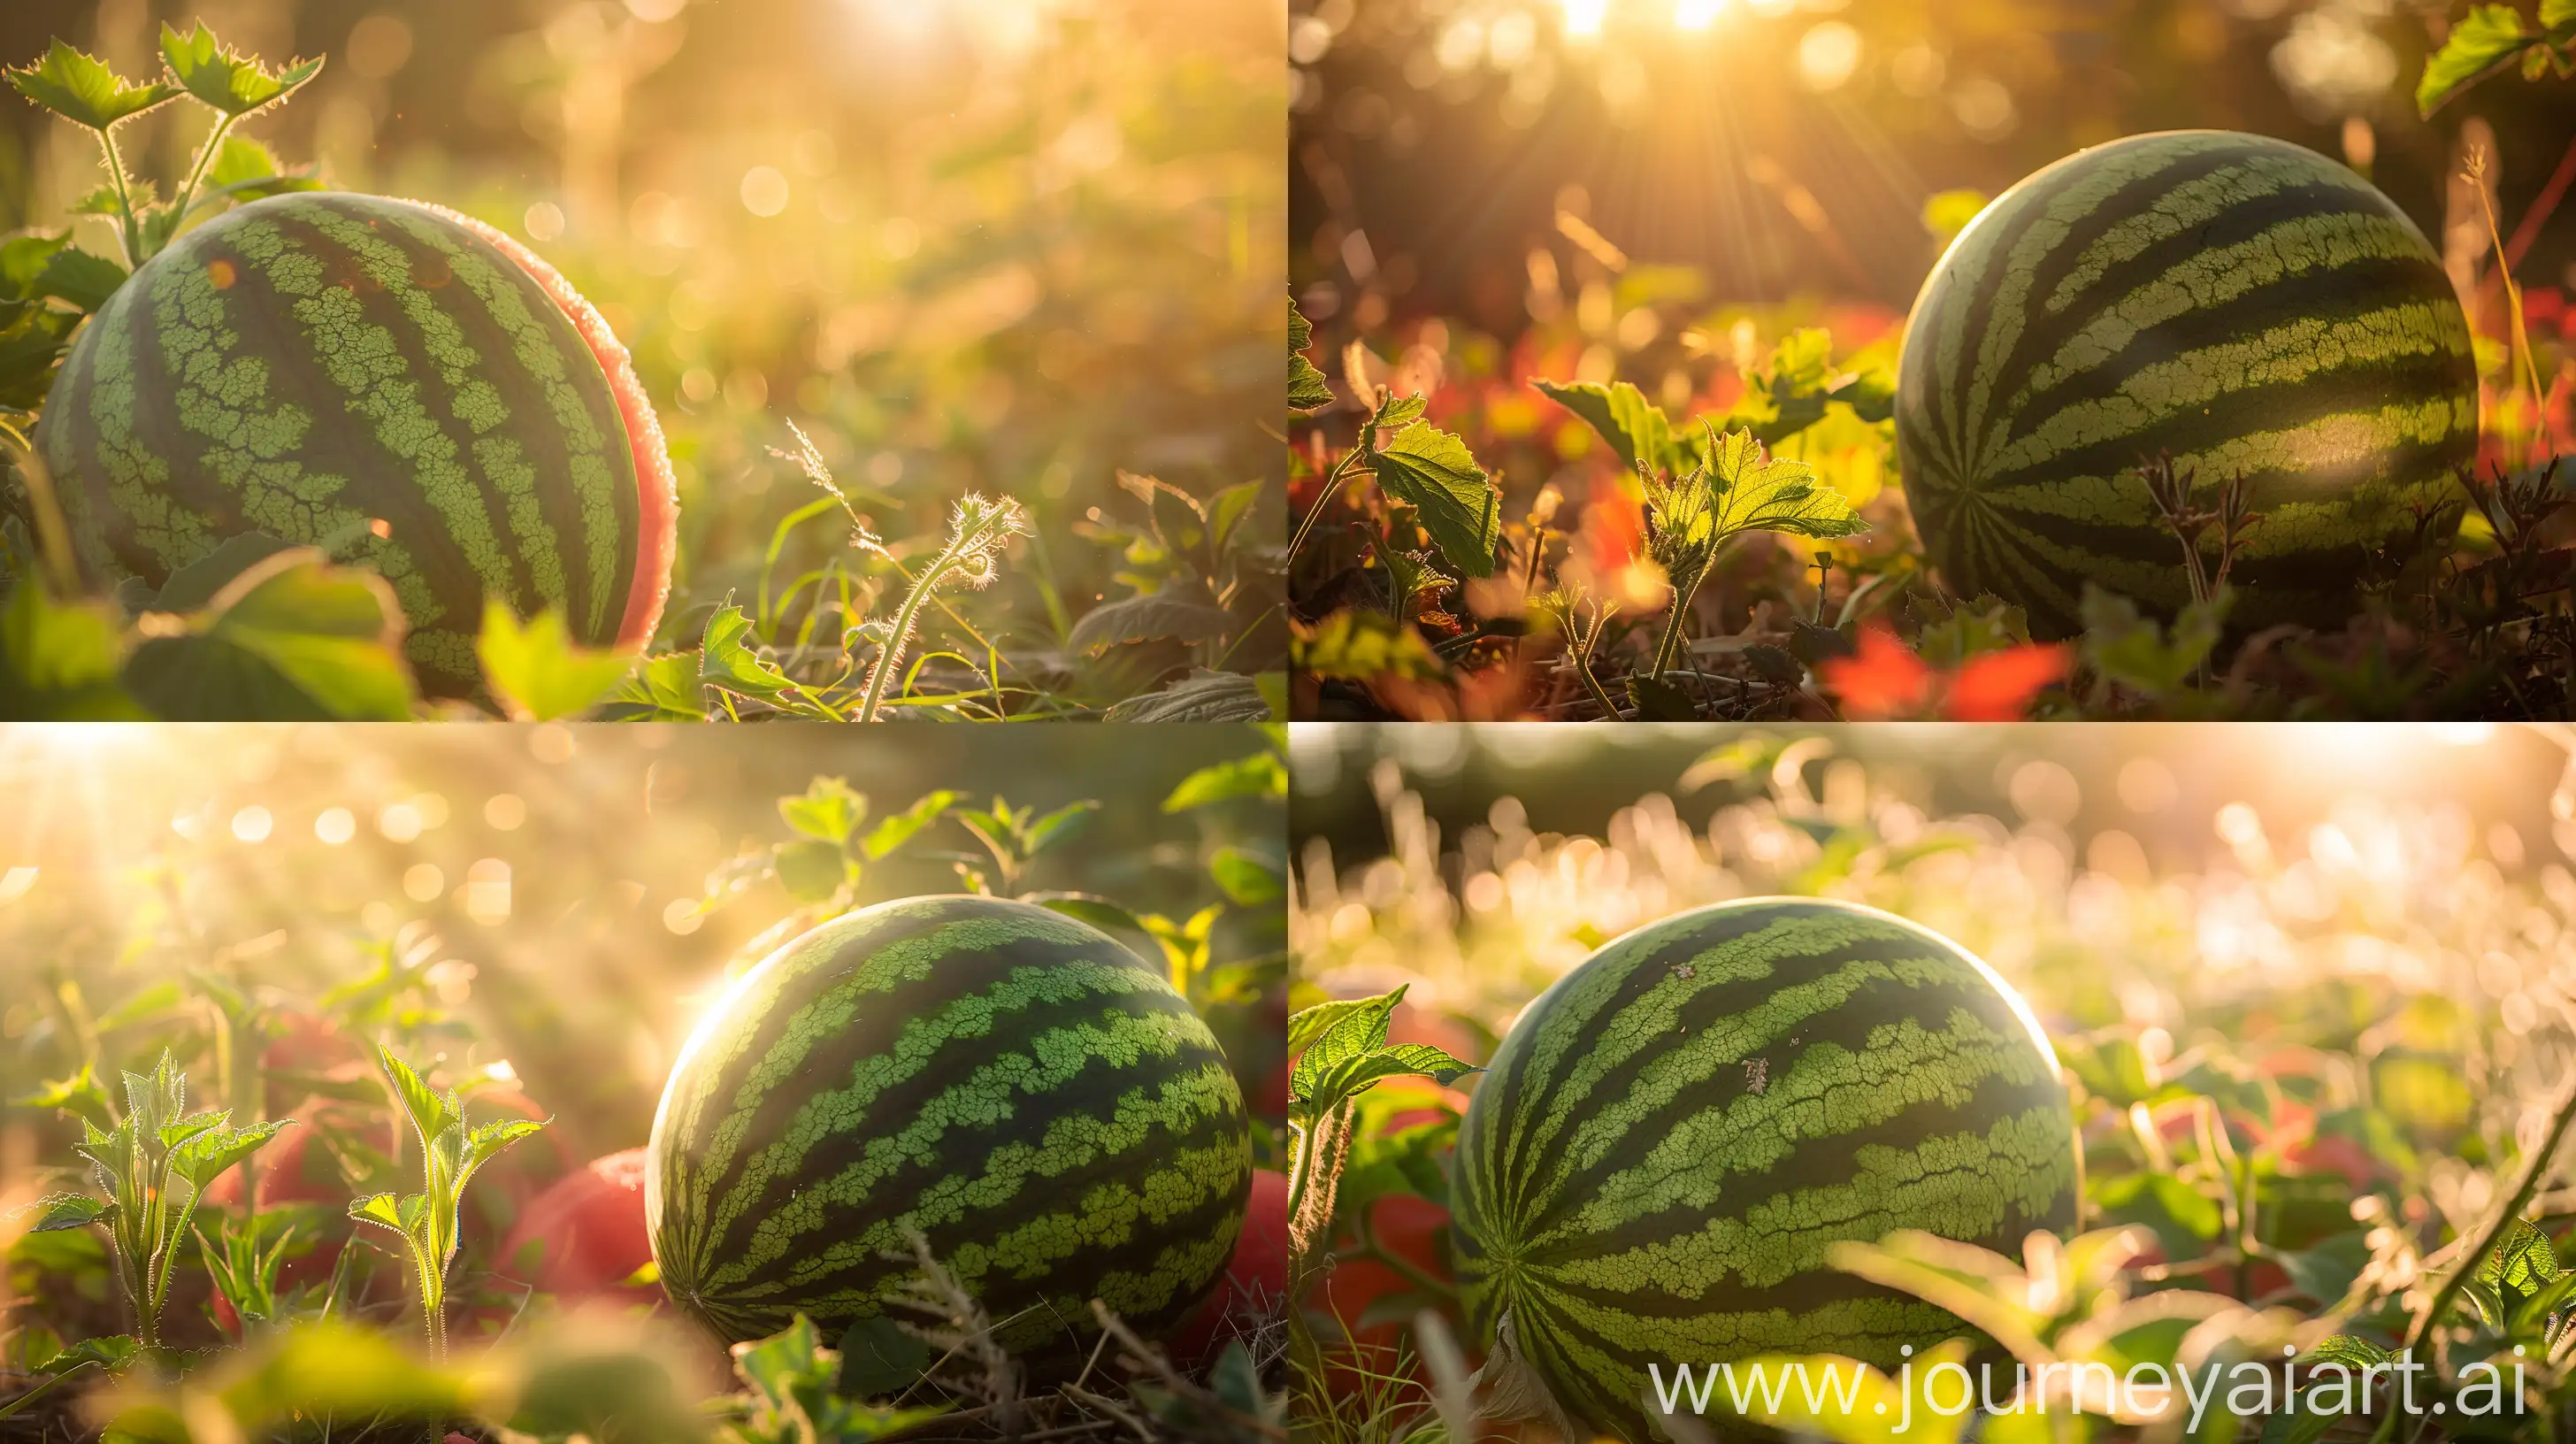 Serene-Scene-Capturing-the-Beauty-of-Congo-Watermelon-in-Golden-Light